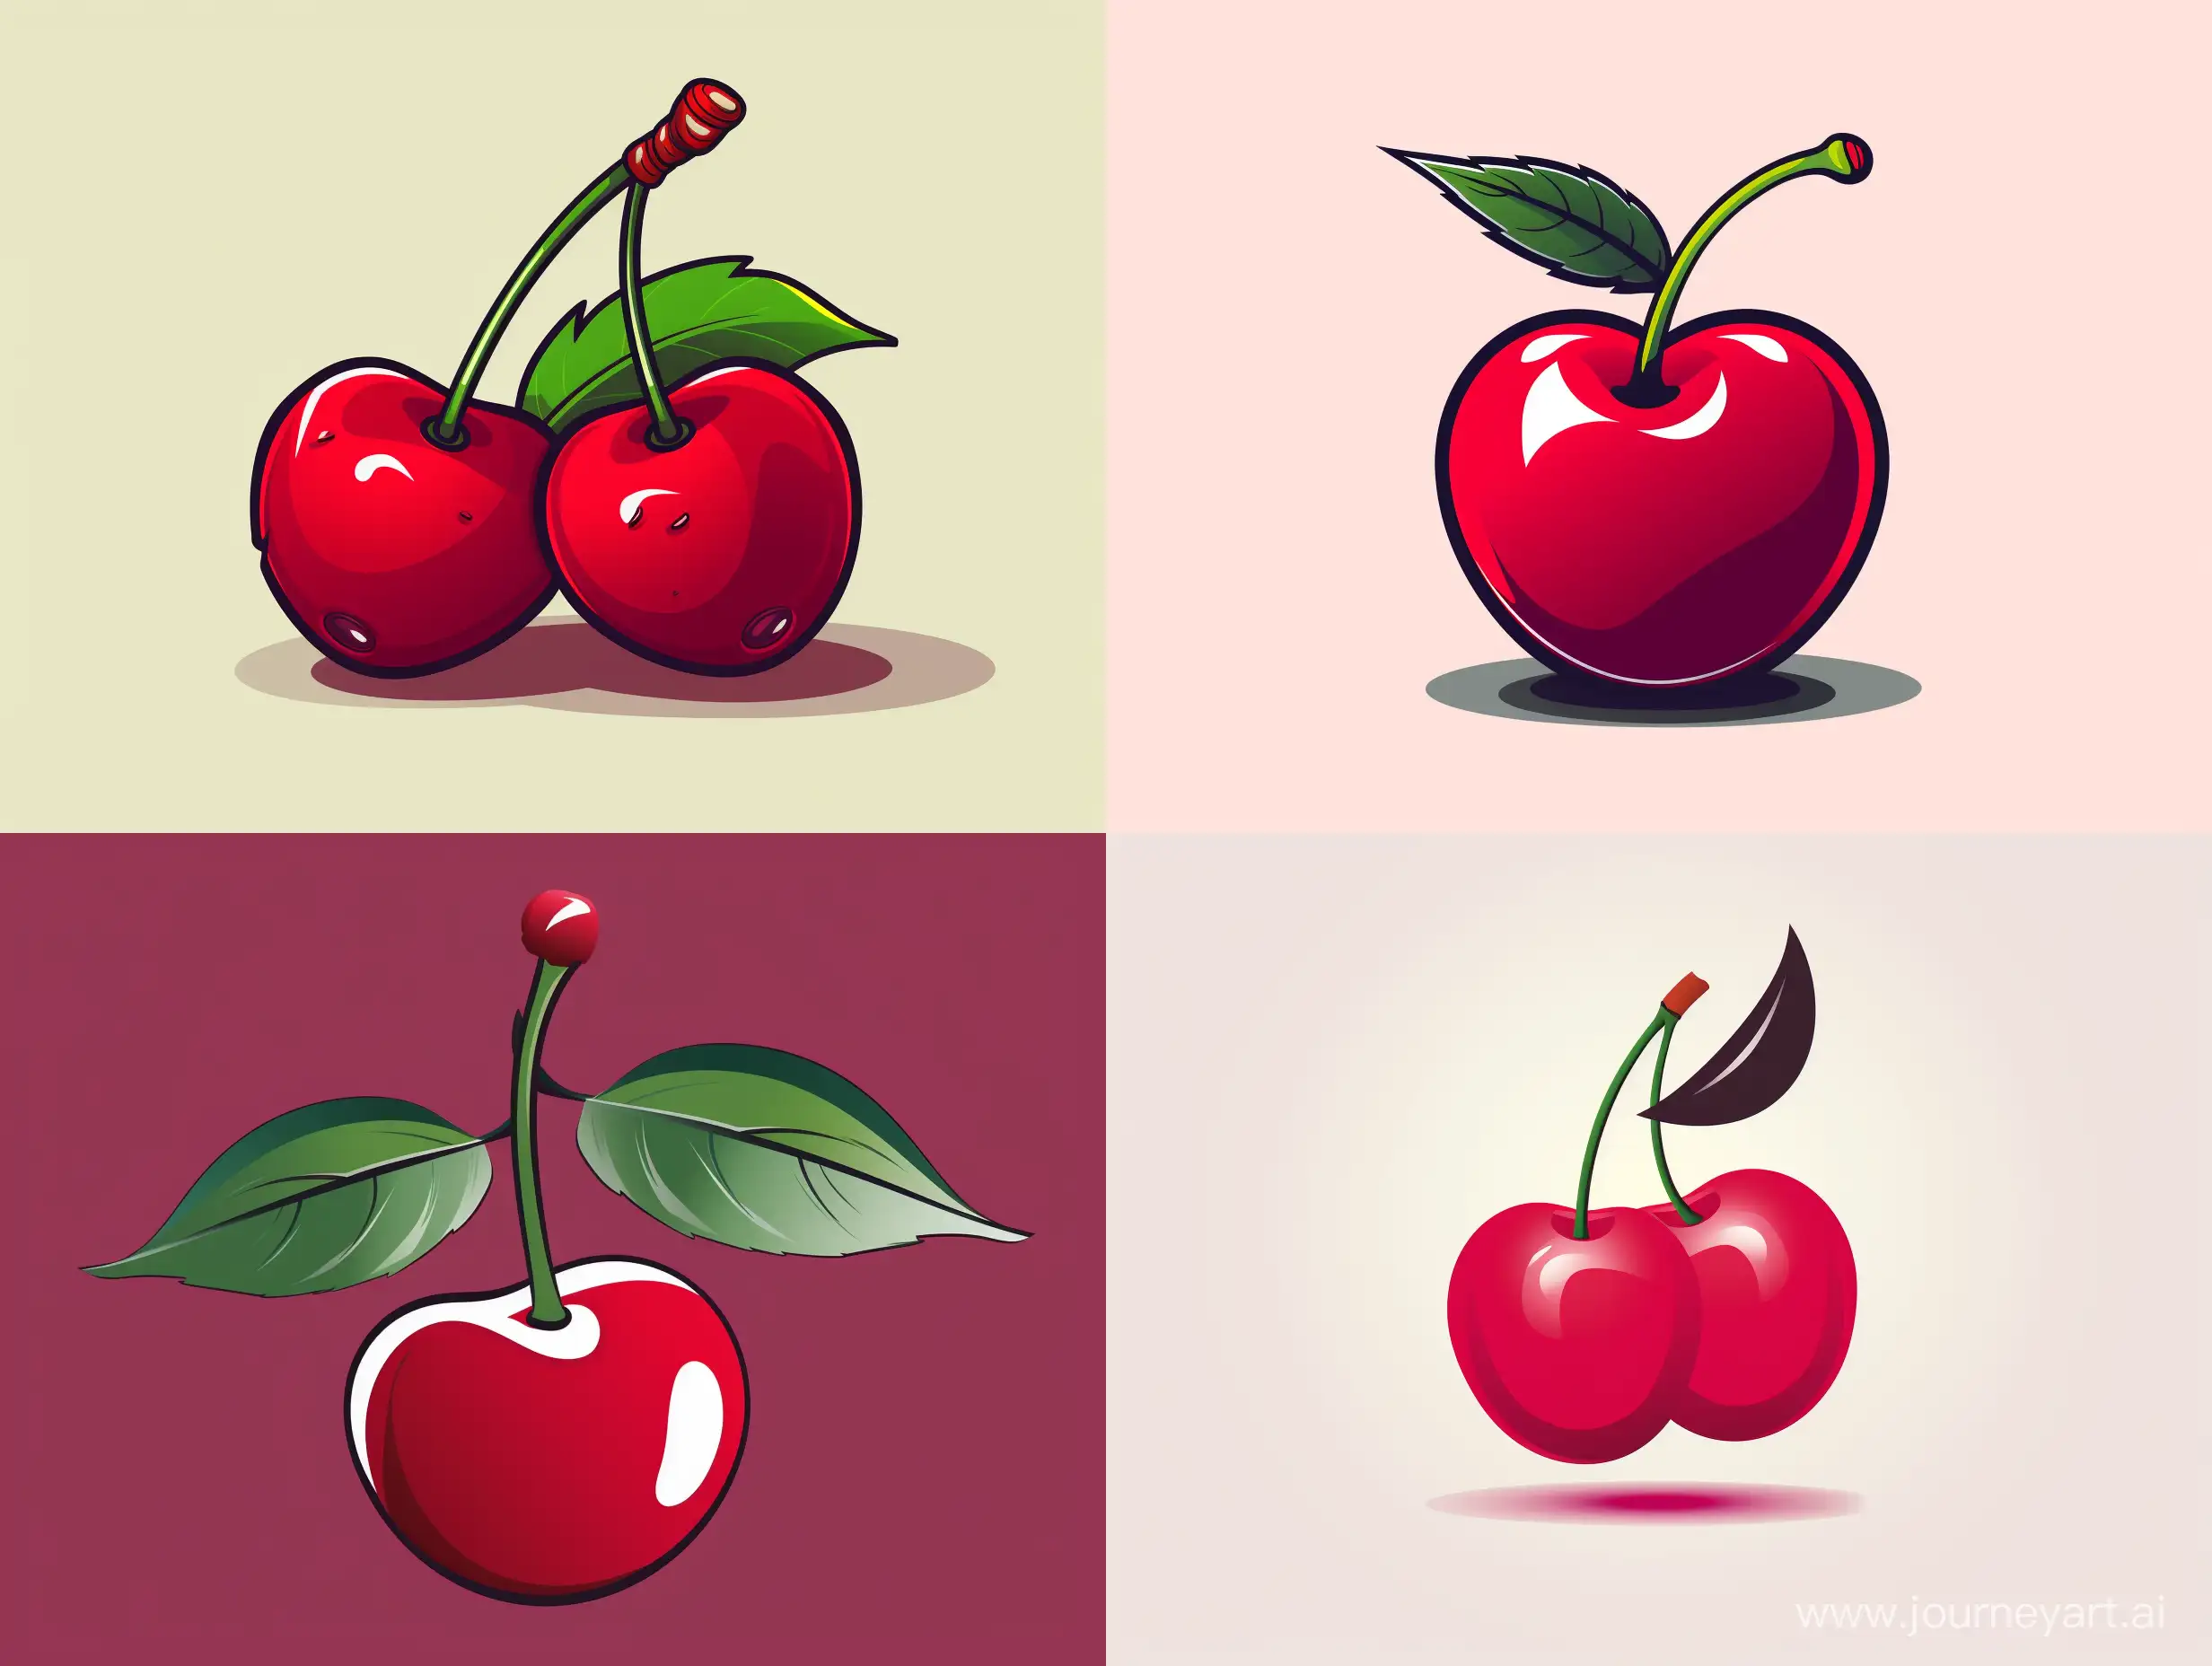 Vibrant-Cherry-Logo-Design-in-43-Aspect-Ratio-Artistic-Appeal-for-Brand-Identity